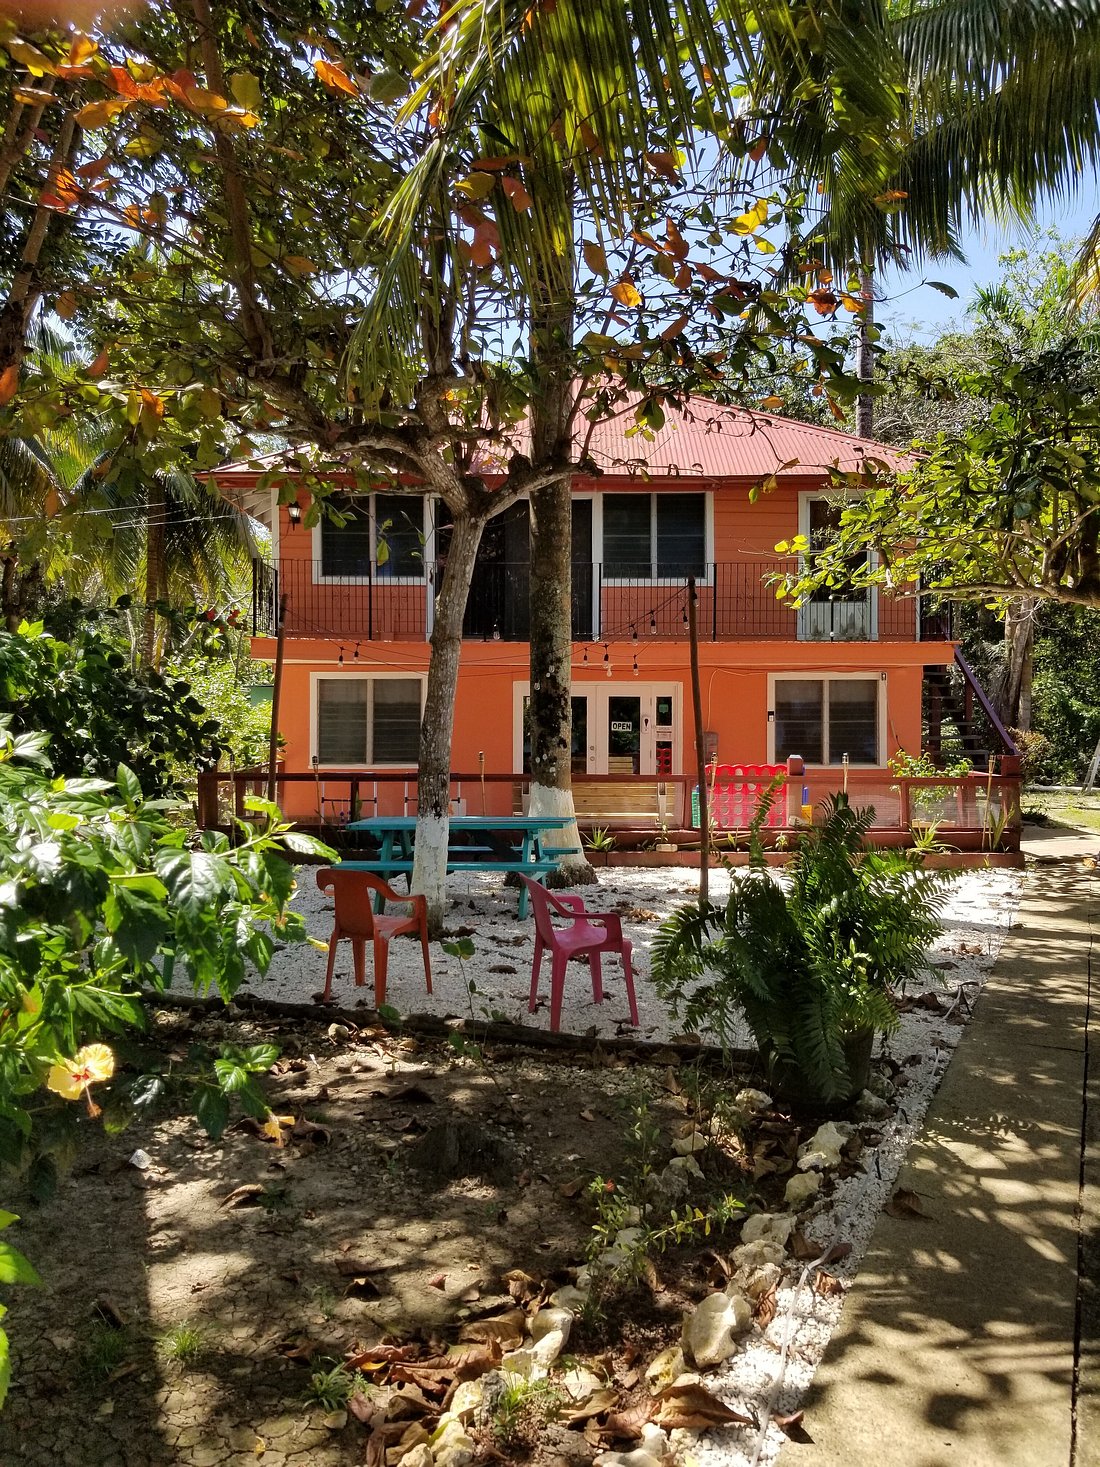 HOME SWEET HOME RESORT $99 ($̶1̶4̶9̶) - Prices & Reviews - West End, Jamaica